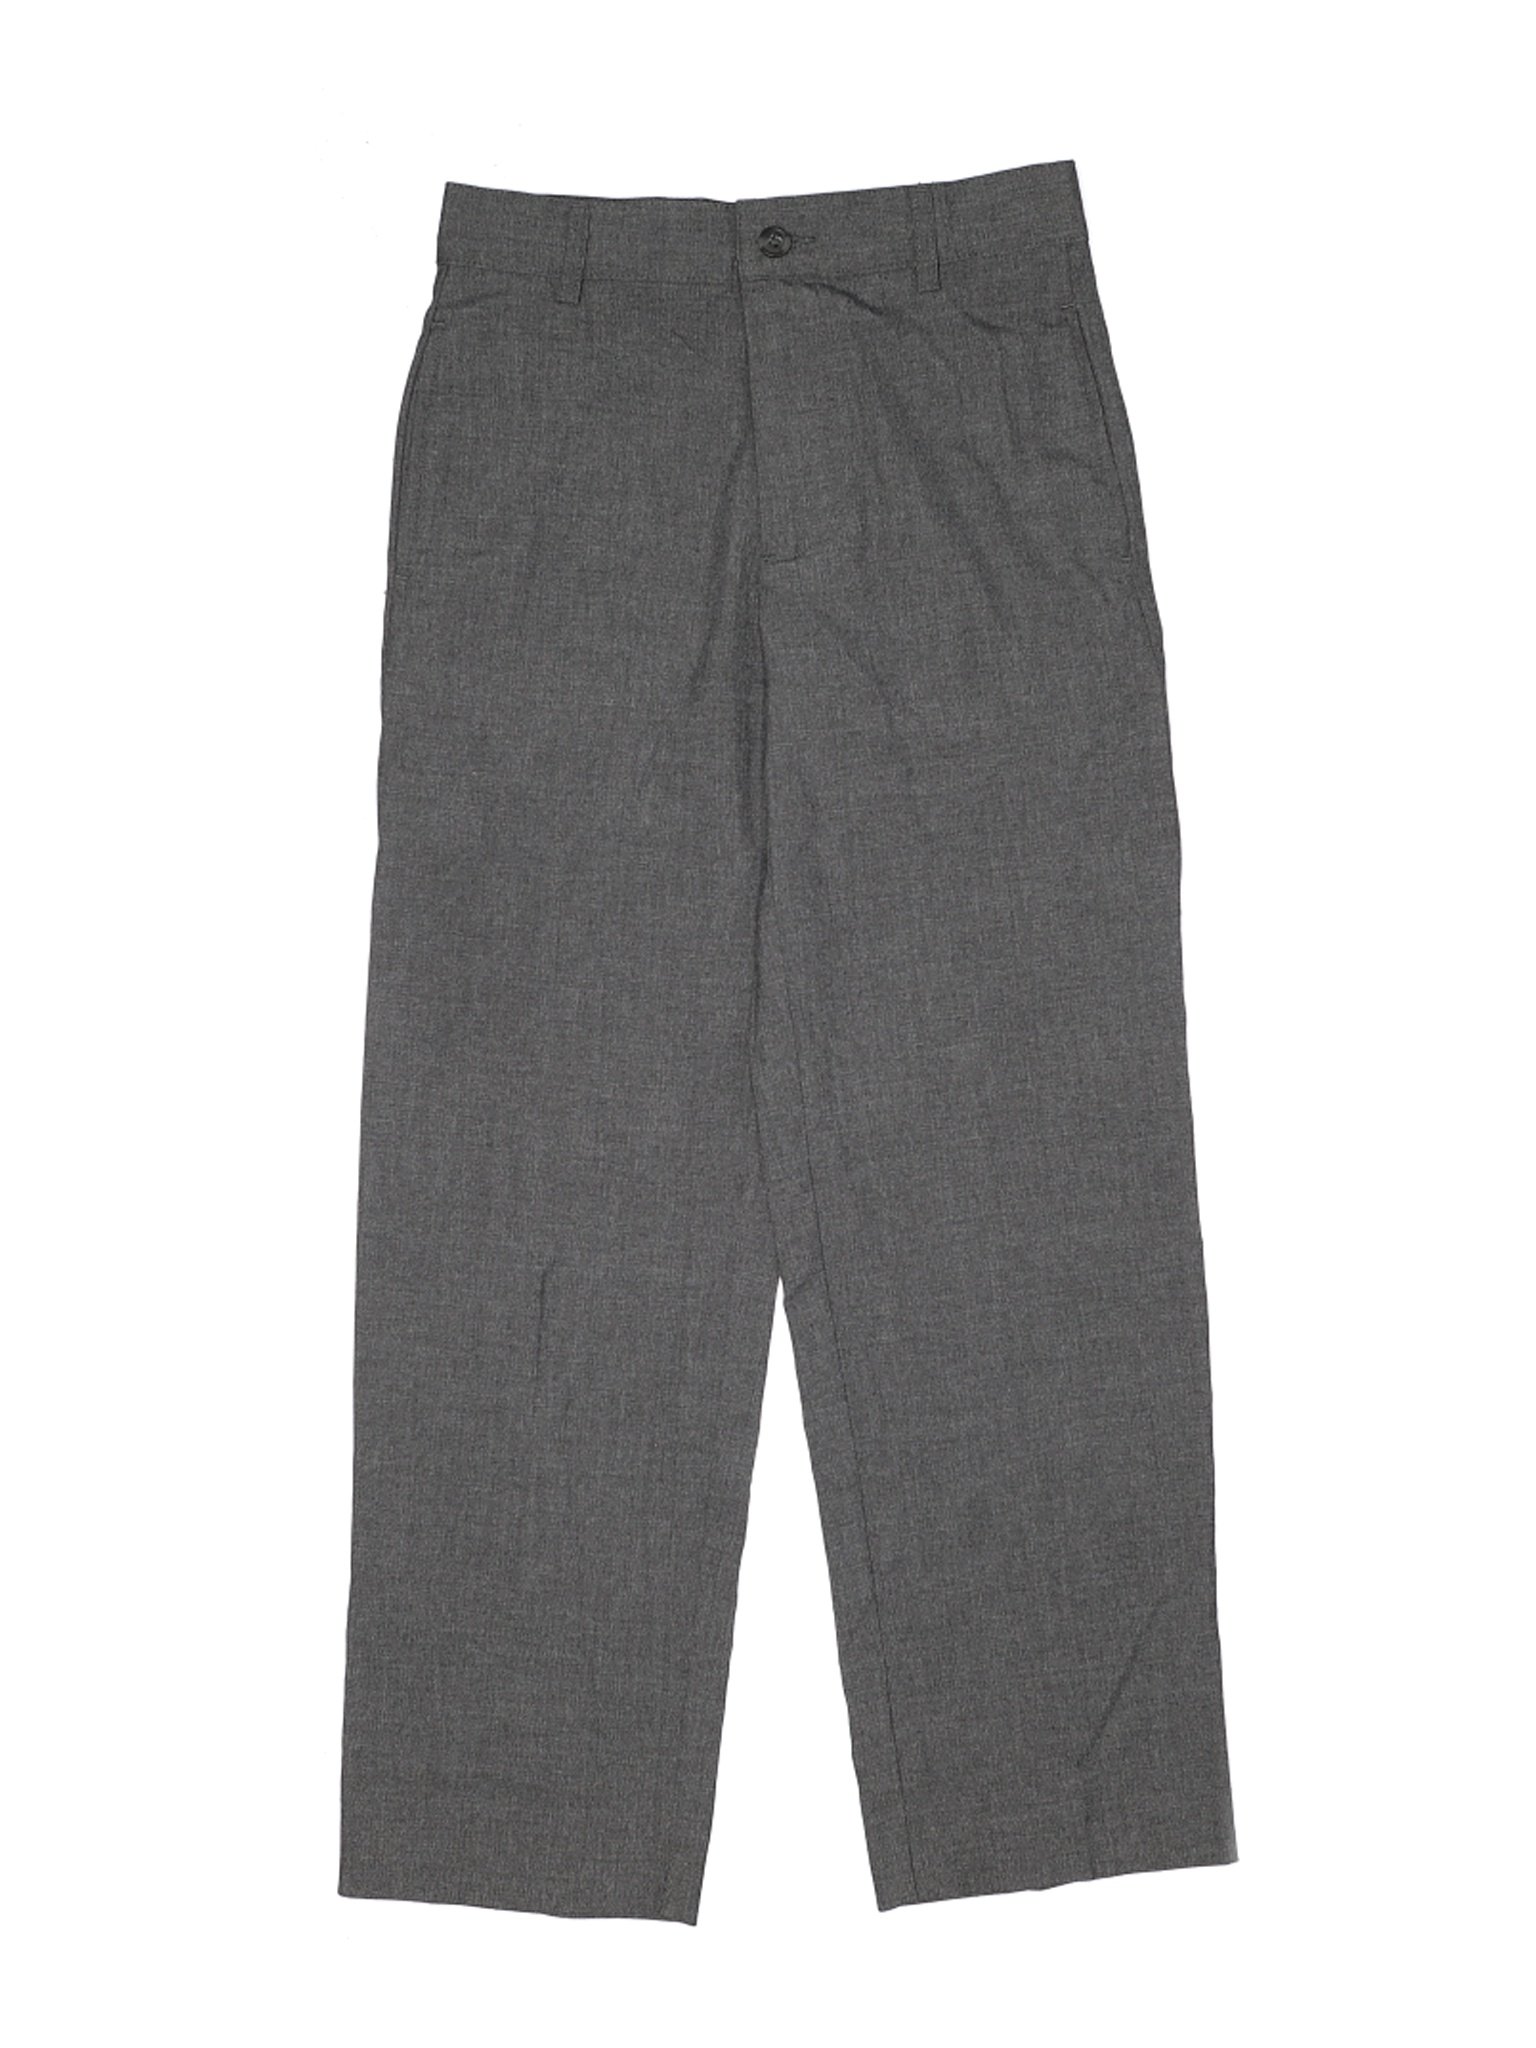 Cat & Jack Boys Gray Dress Pants 8 | eBay